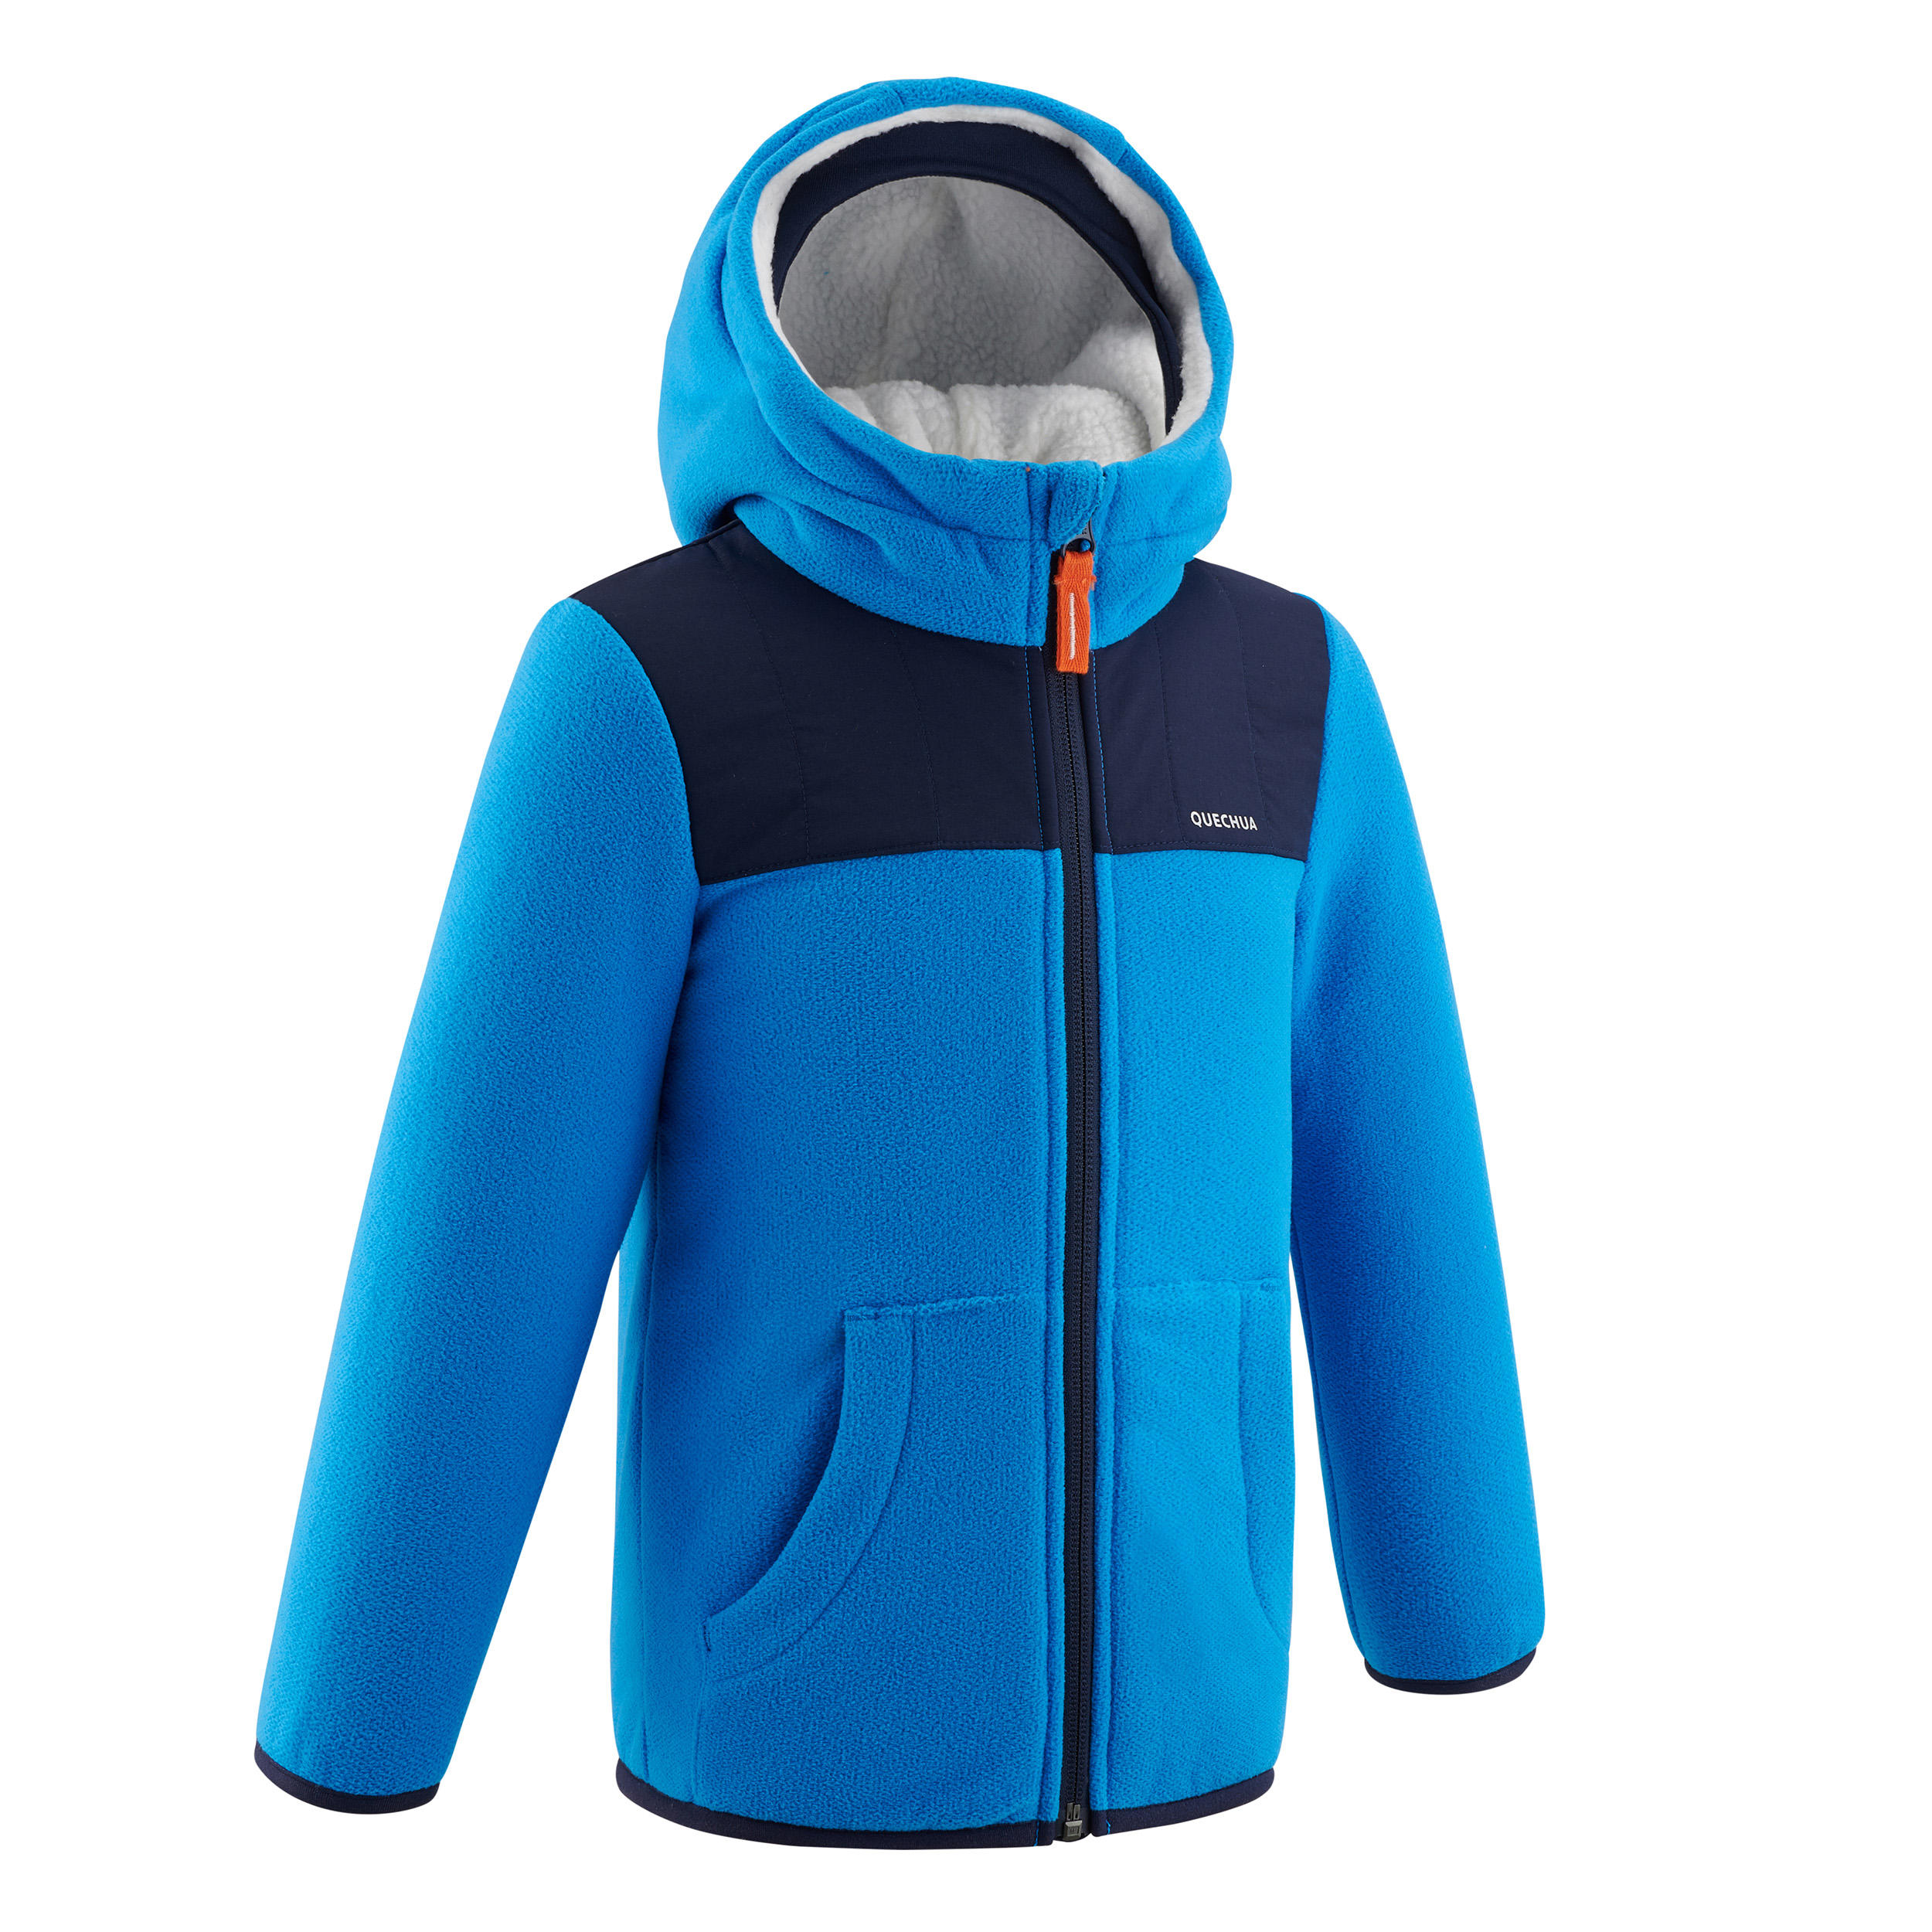 Kids’ Warm Hiking Fleece Jacket - MH500 Aged 2-6 - Blue 1/8